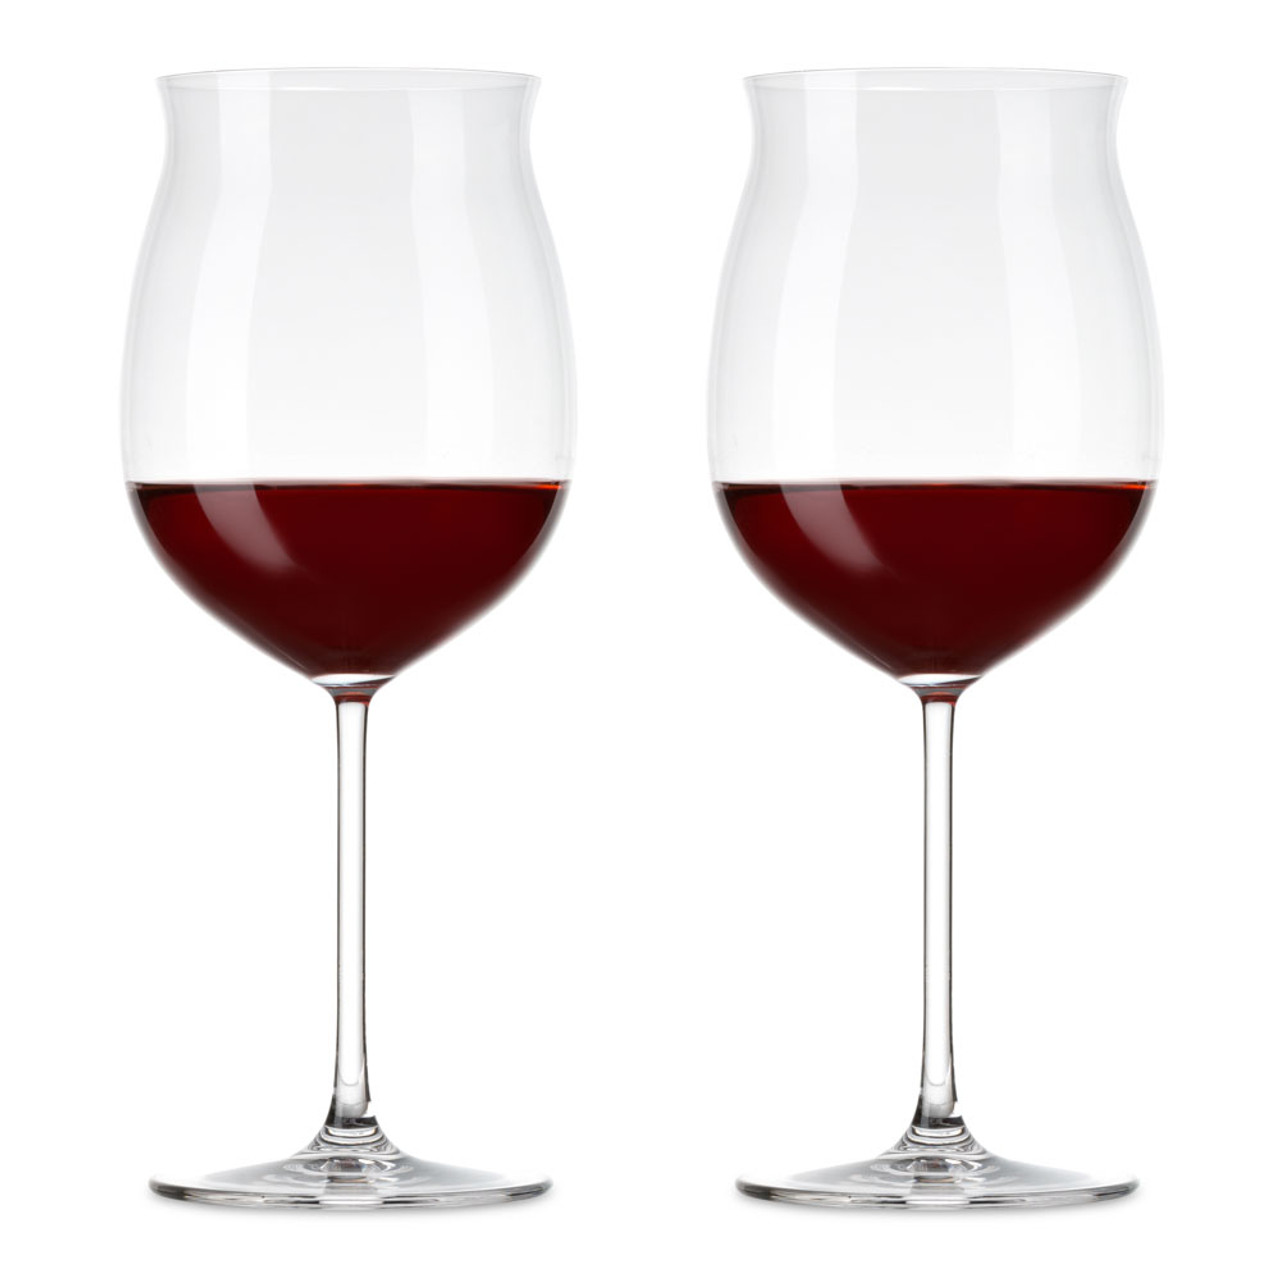 https://cdn11.bigcommerce.com/s-cznxq08r7/images/stencil/1280x1280/products/4982/13814/66127-1052486-Nude-Glass-Vintage-Grand-Bourgogne-Crystal-Burgundy-Wine-Glasses-24-pt-5-oz-Set-of-2-01__46716.1623769007.jpg?c=1